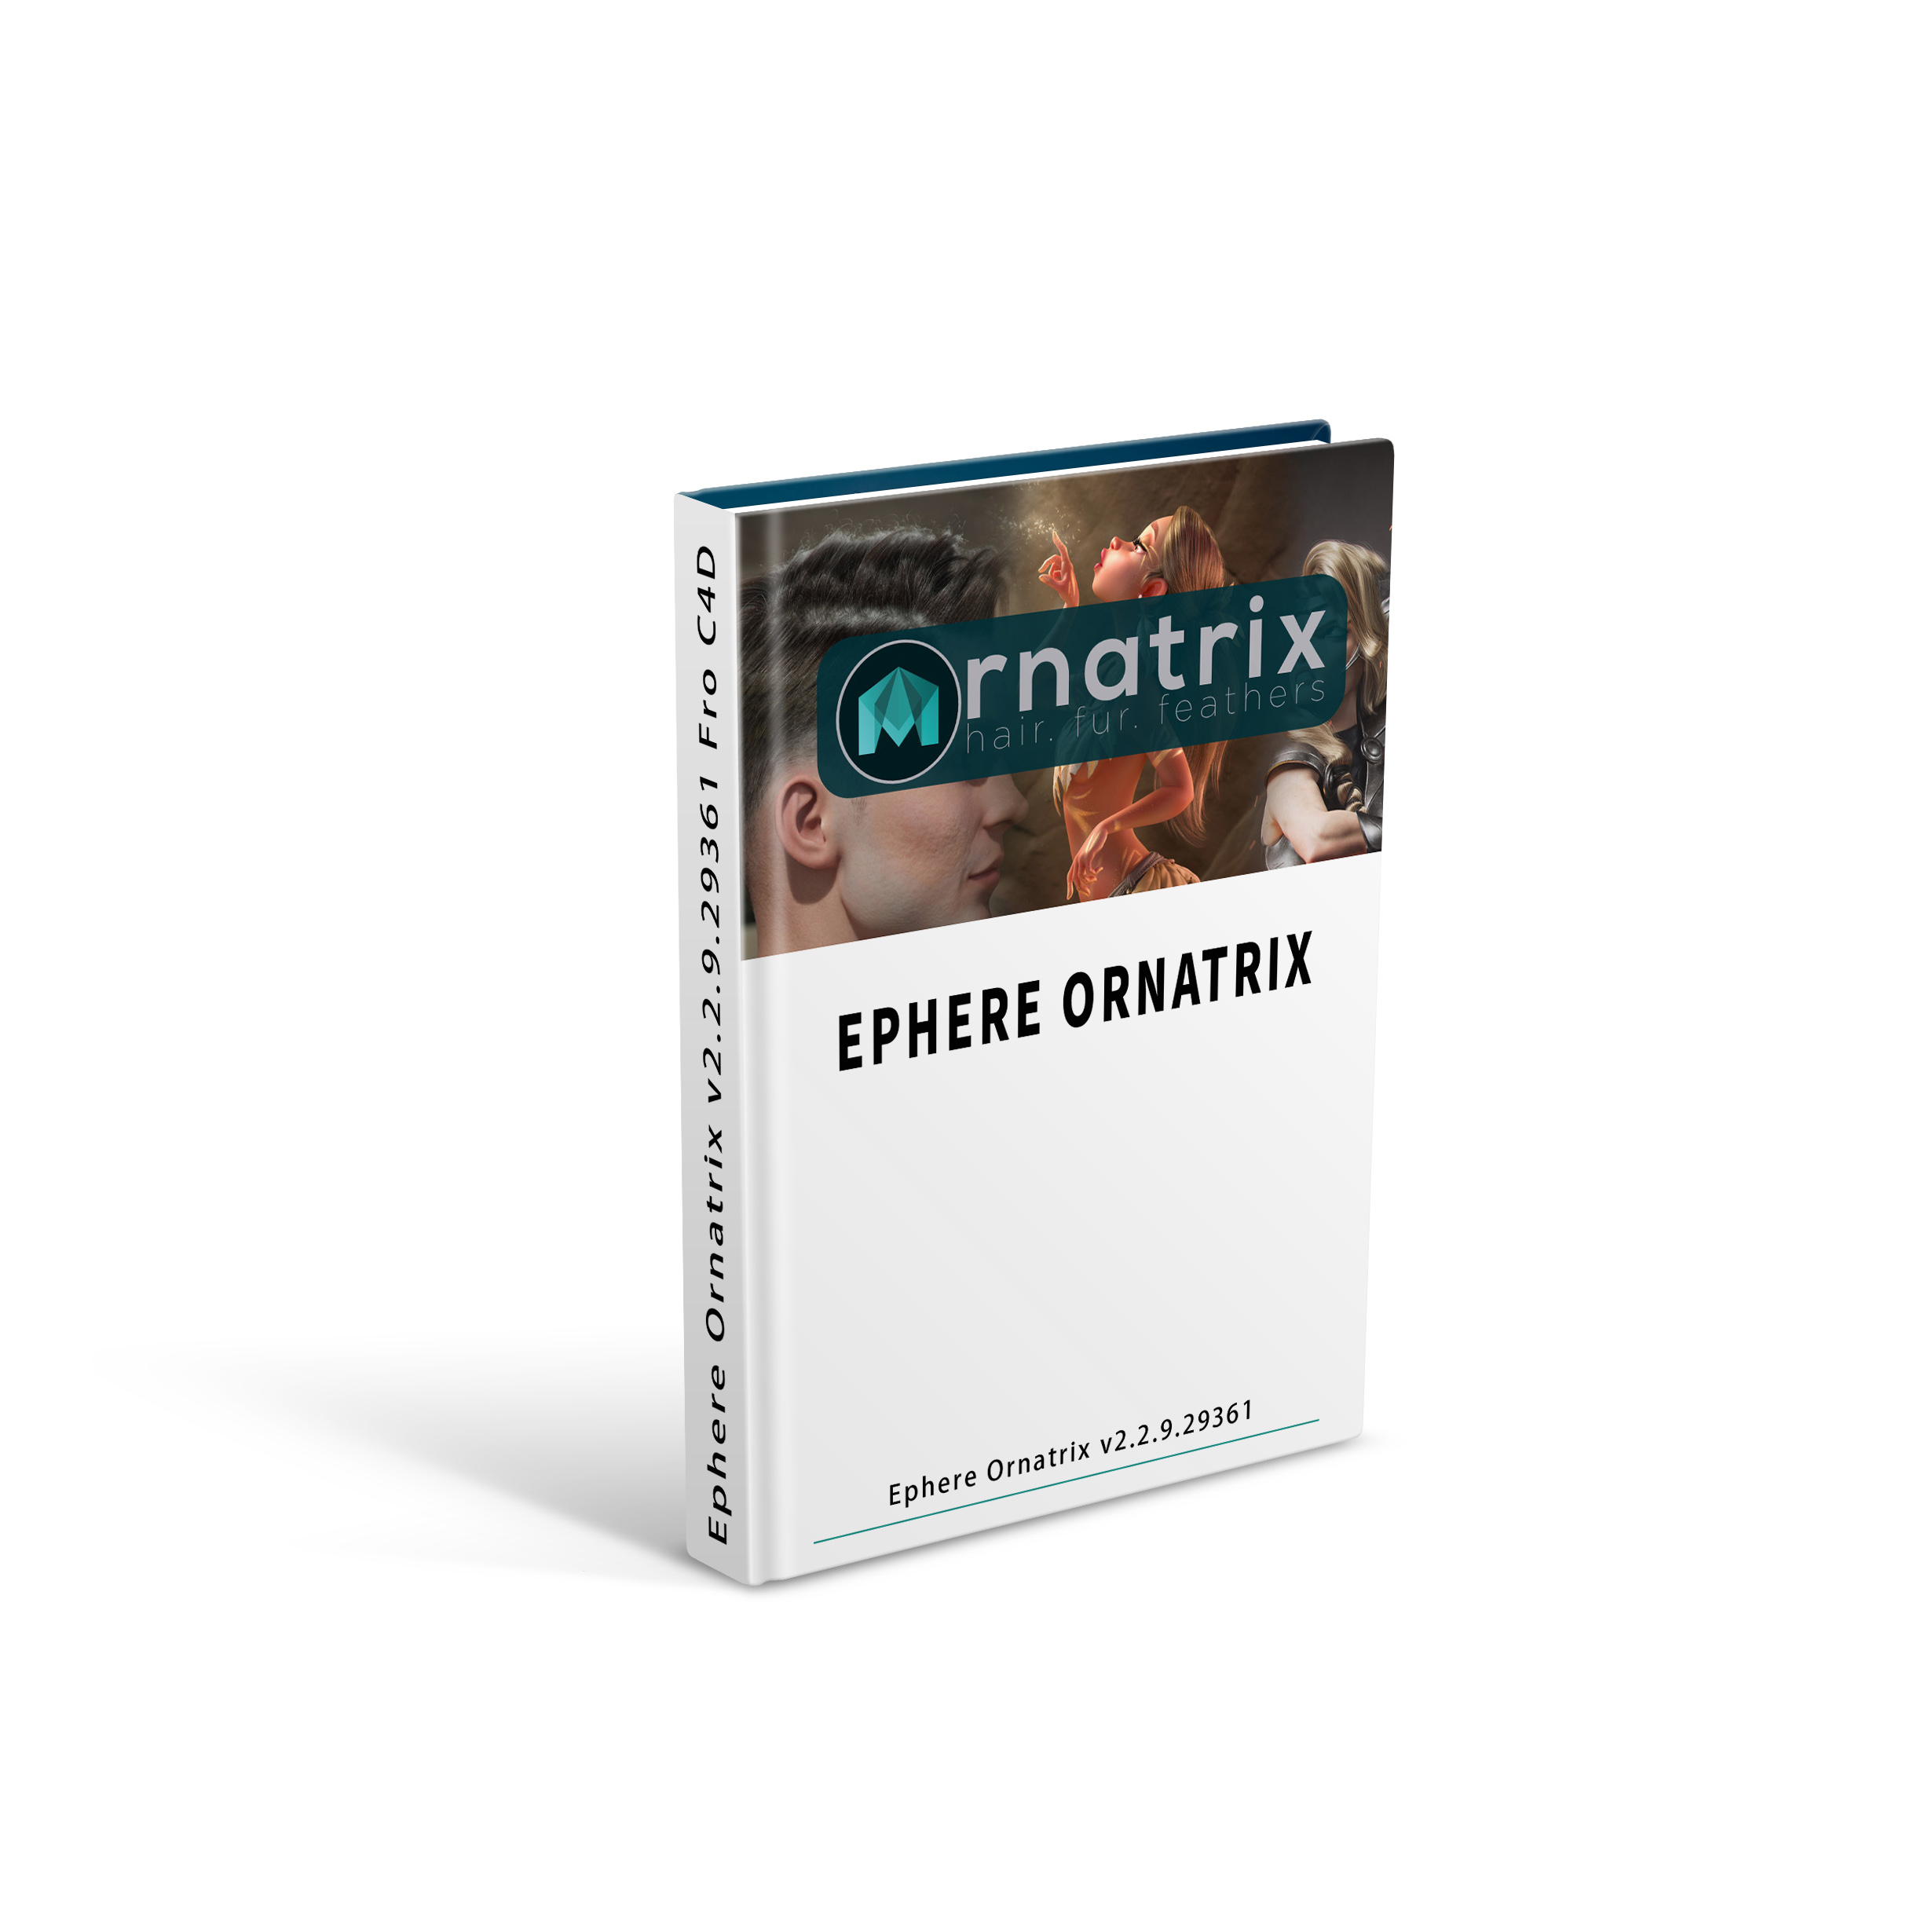 Ephere Ornatrix v2.3.0.29616 Fro Cinema 4D R19-R25 英文破解版 毛发插件